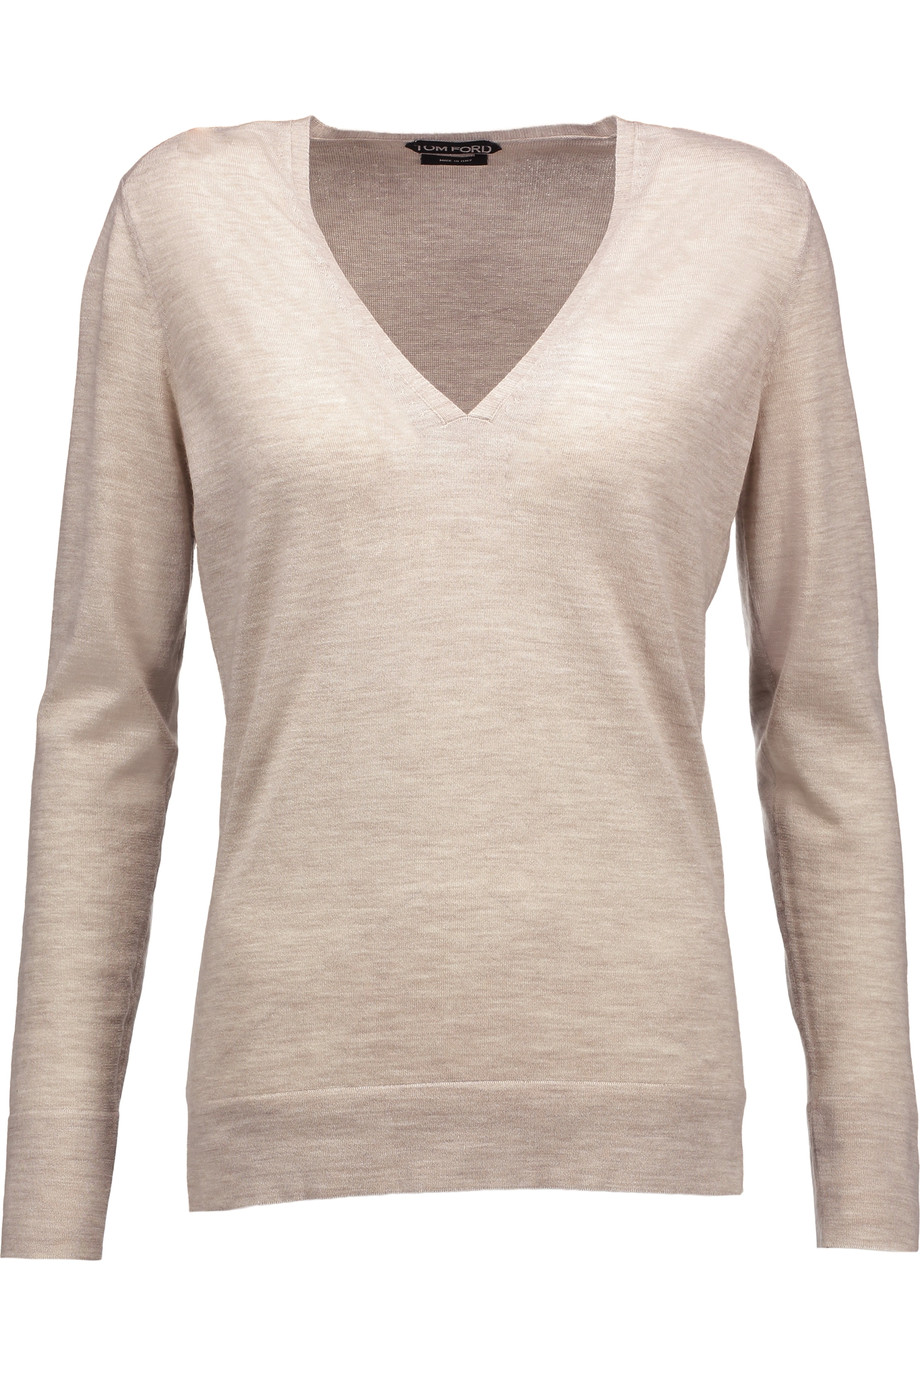 Tom Ford Cashmere Sweater | ModeSens